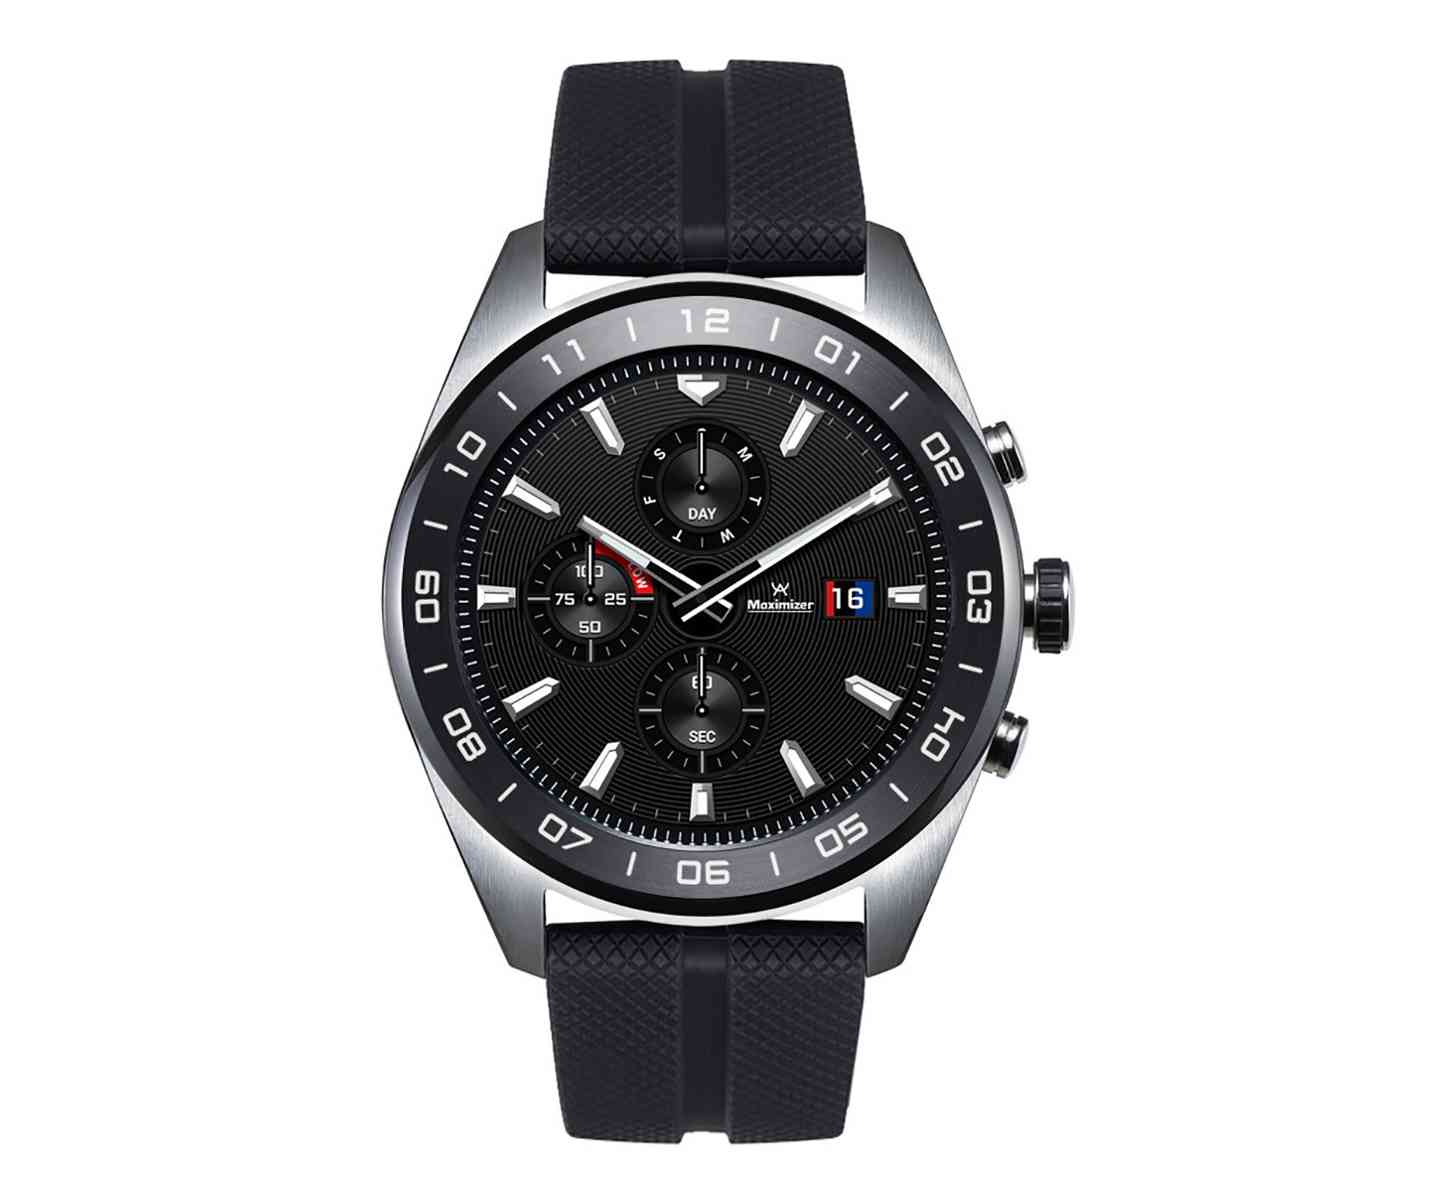 LG Watch W7 official Wear OS smartwatch